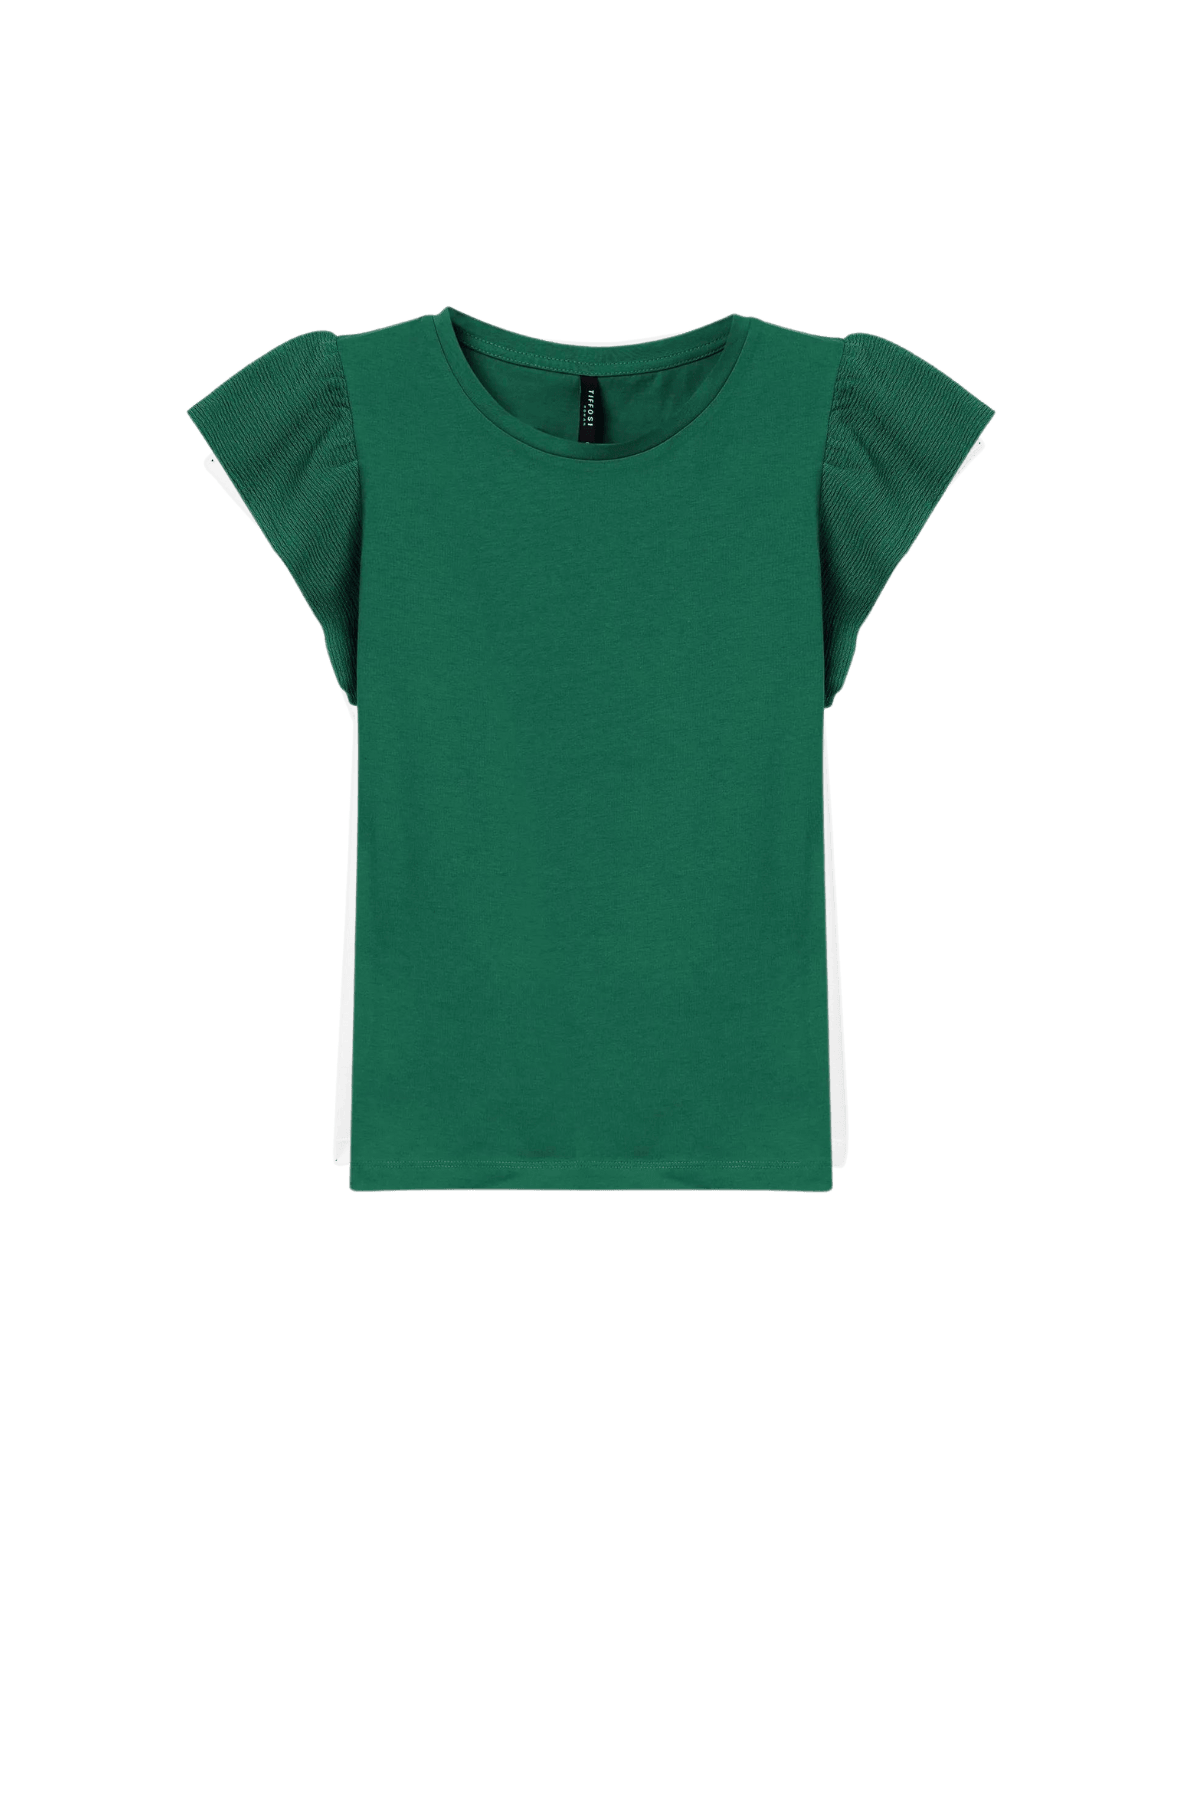 Camiseta TIFFOSI Kira 13 Verde - ECRU